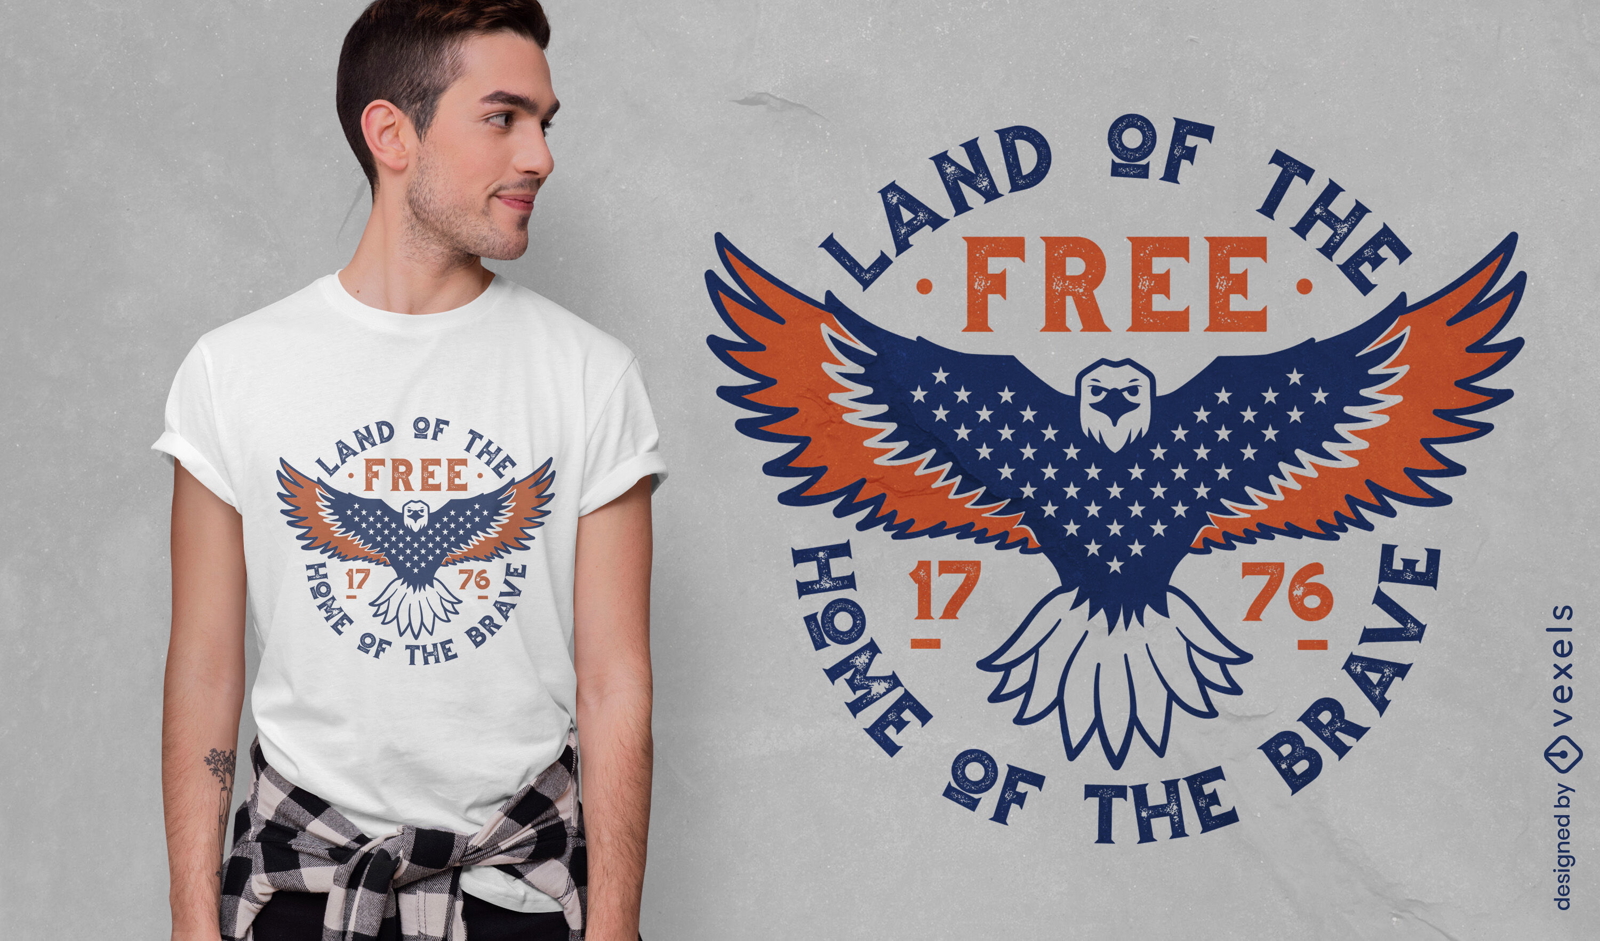 USA eagle bird flying t-shirt design